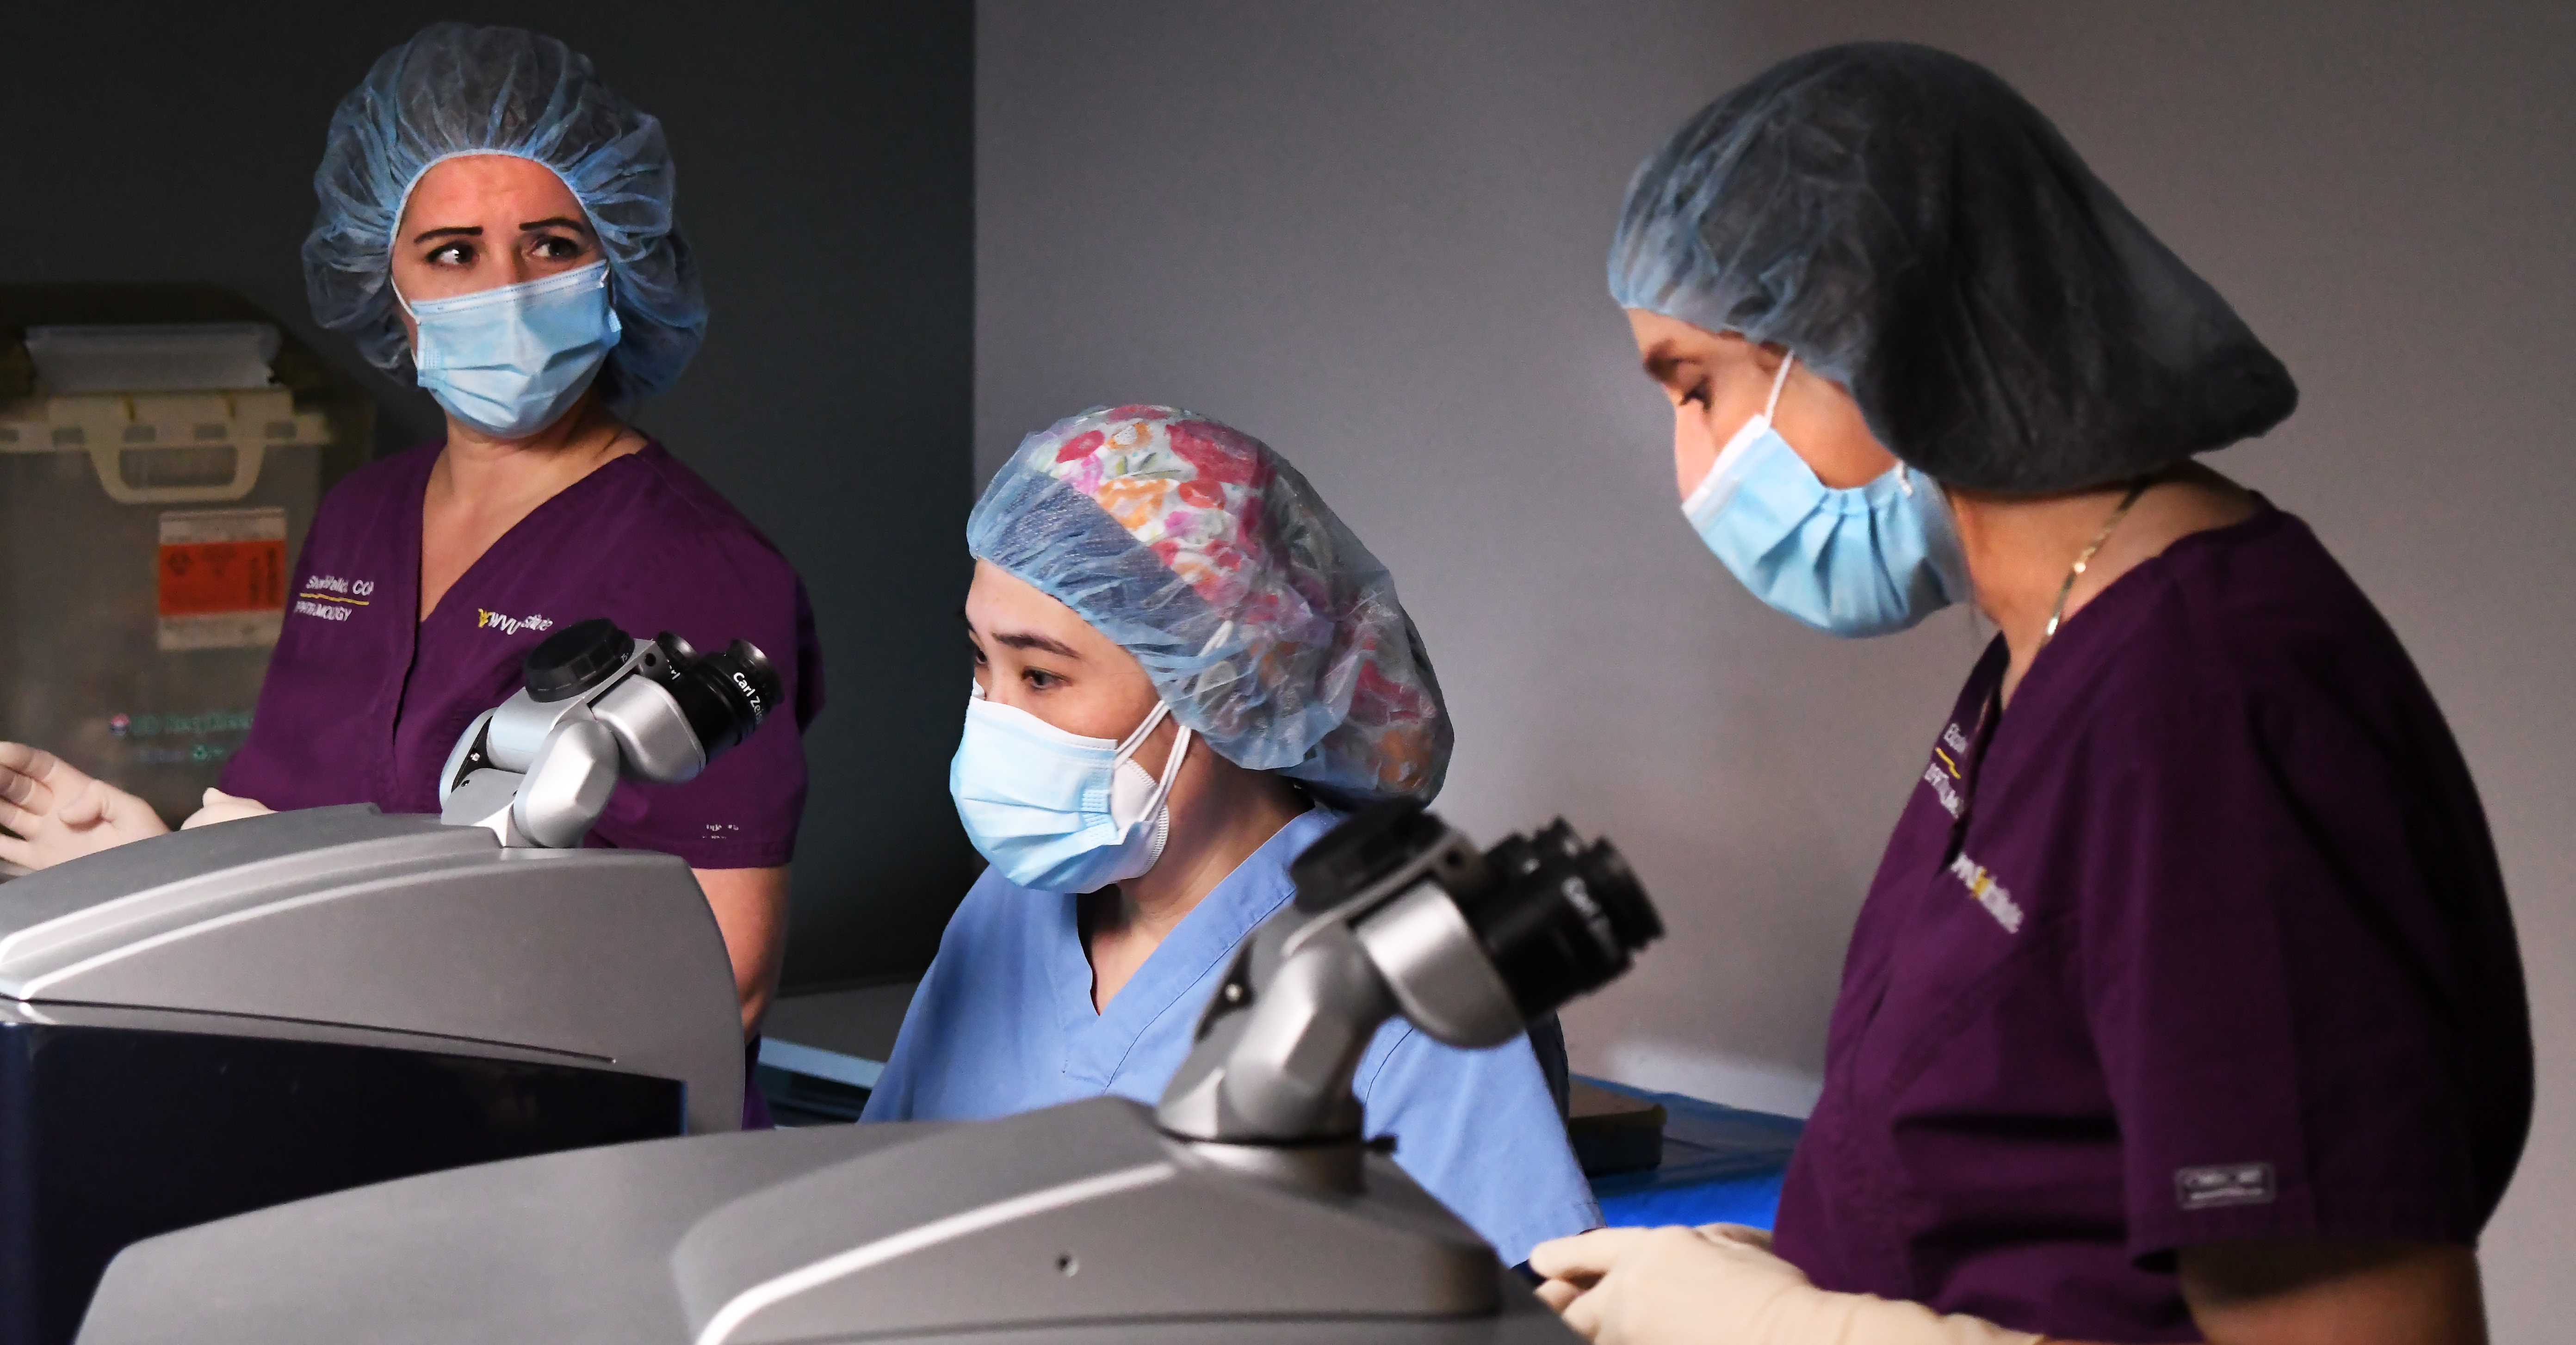 Dr. Lingo Lai and team perform LASIK on a patient